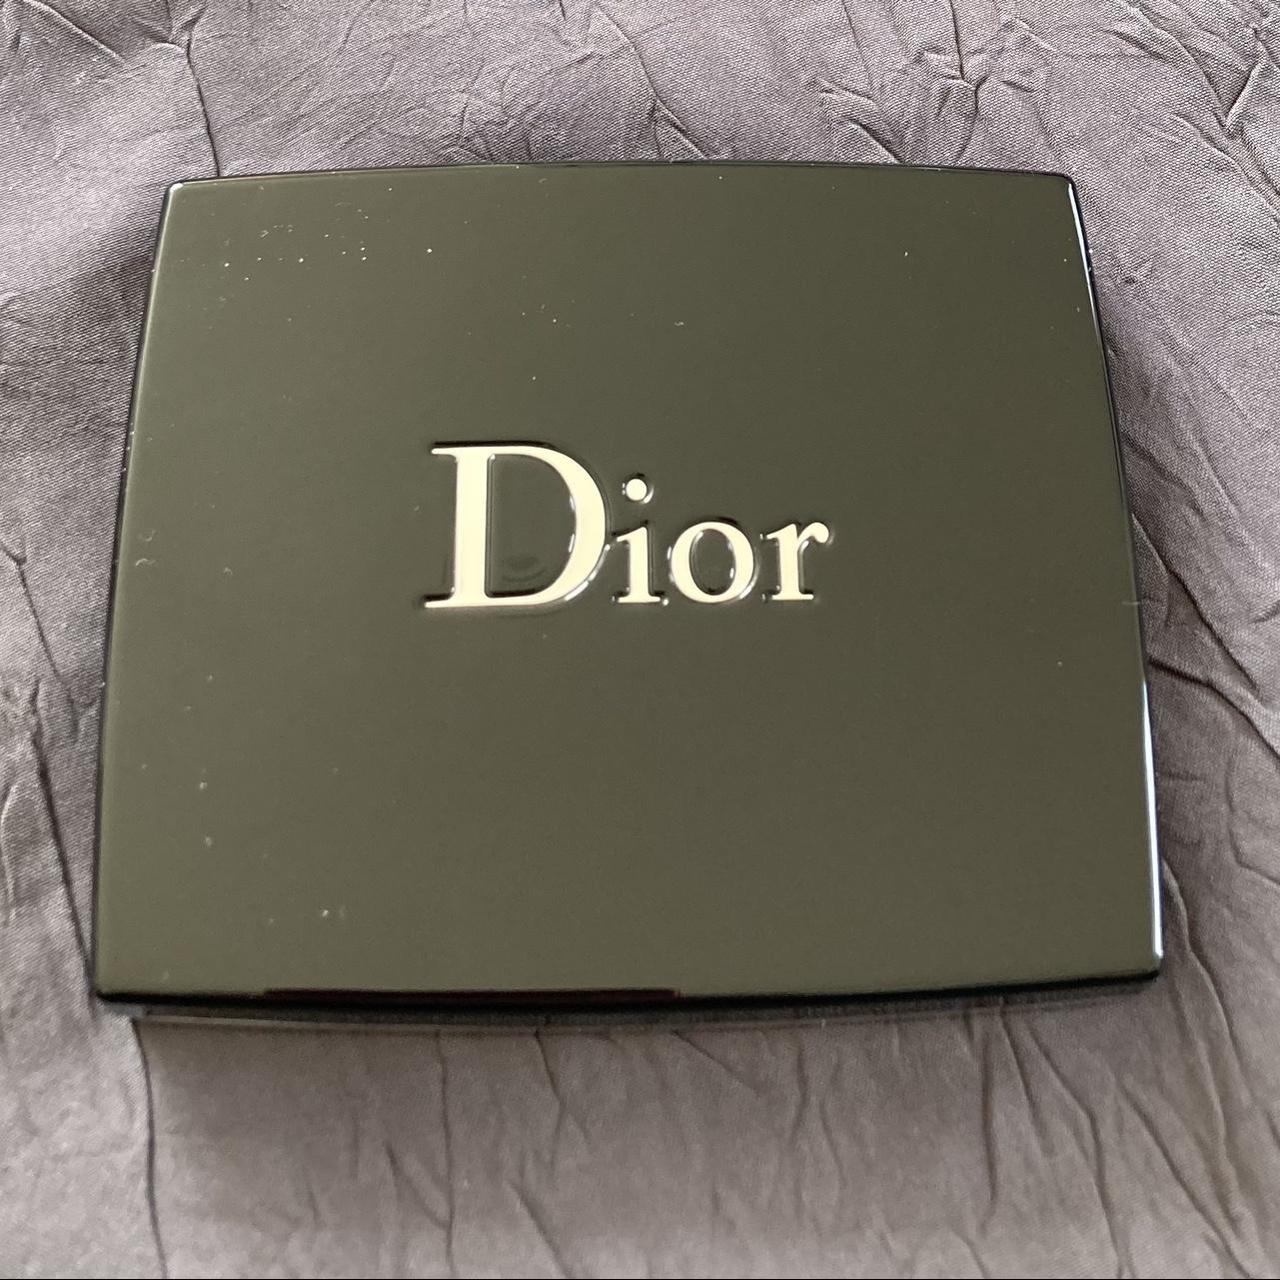 Dior Brown Makeup | Depop